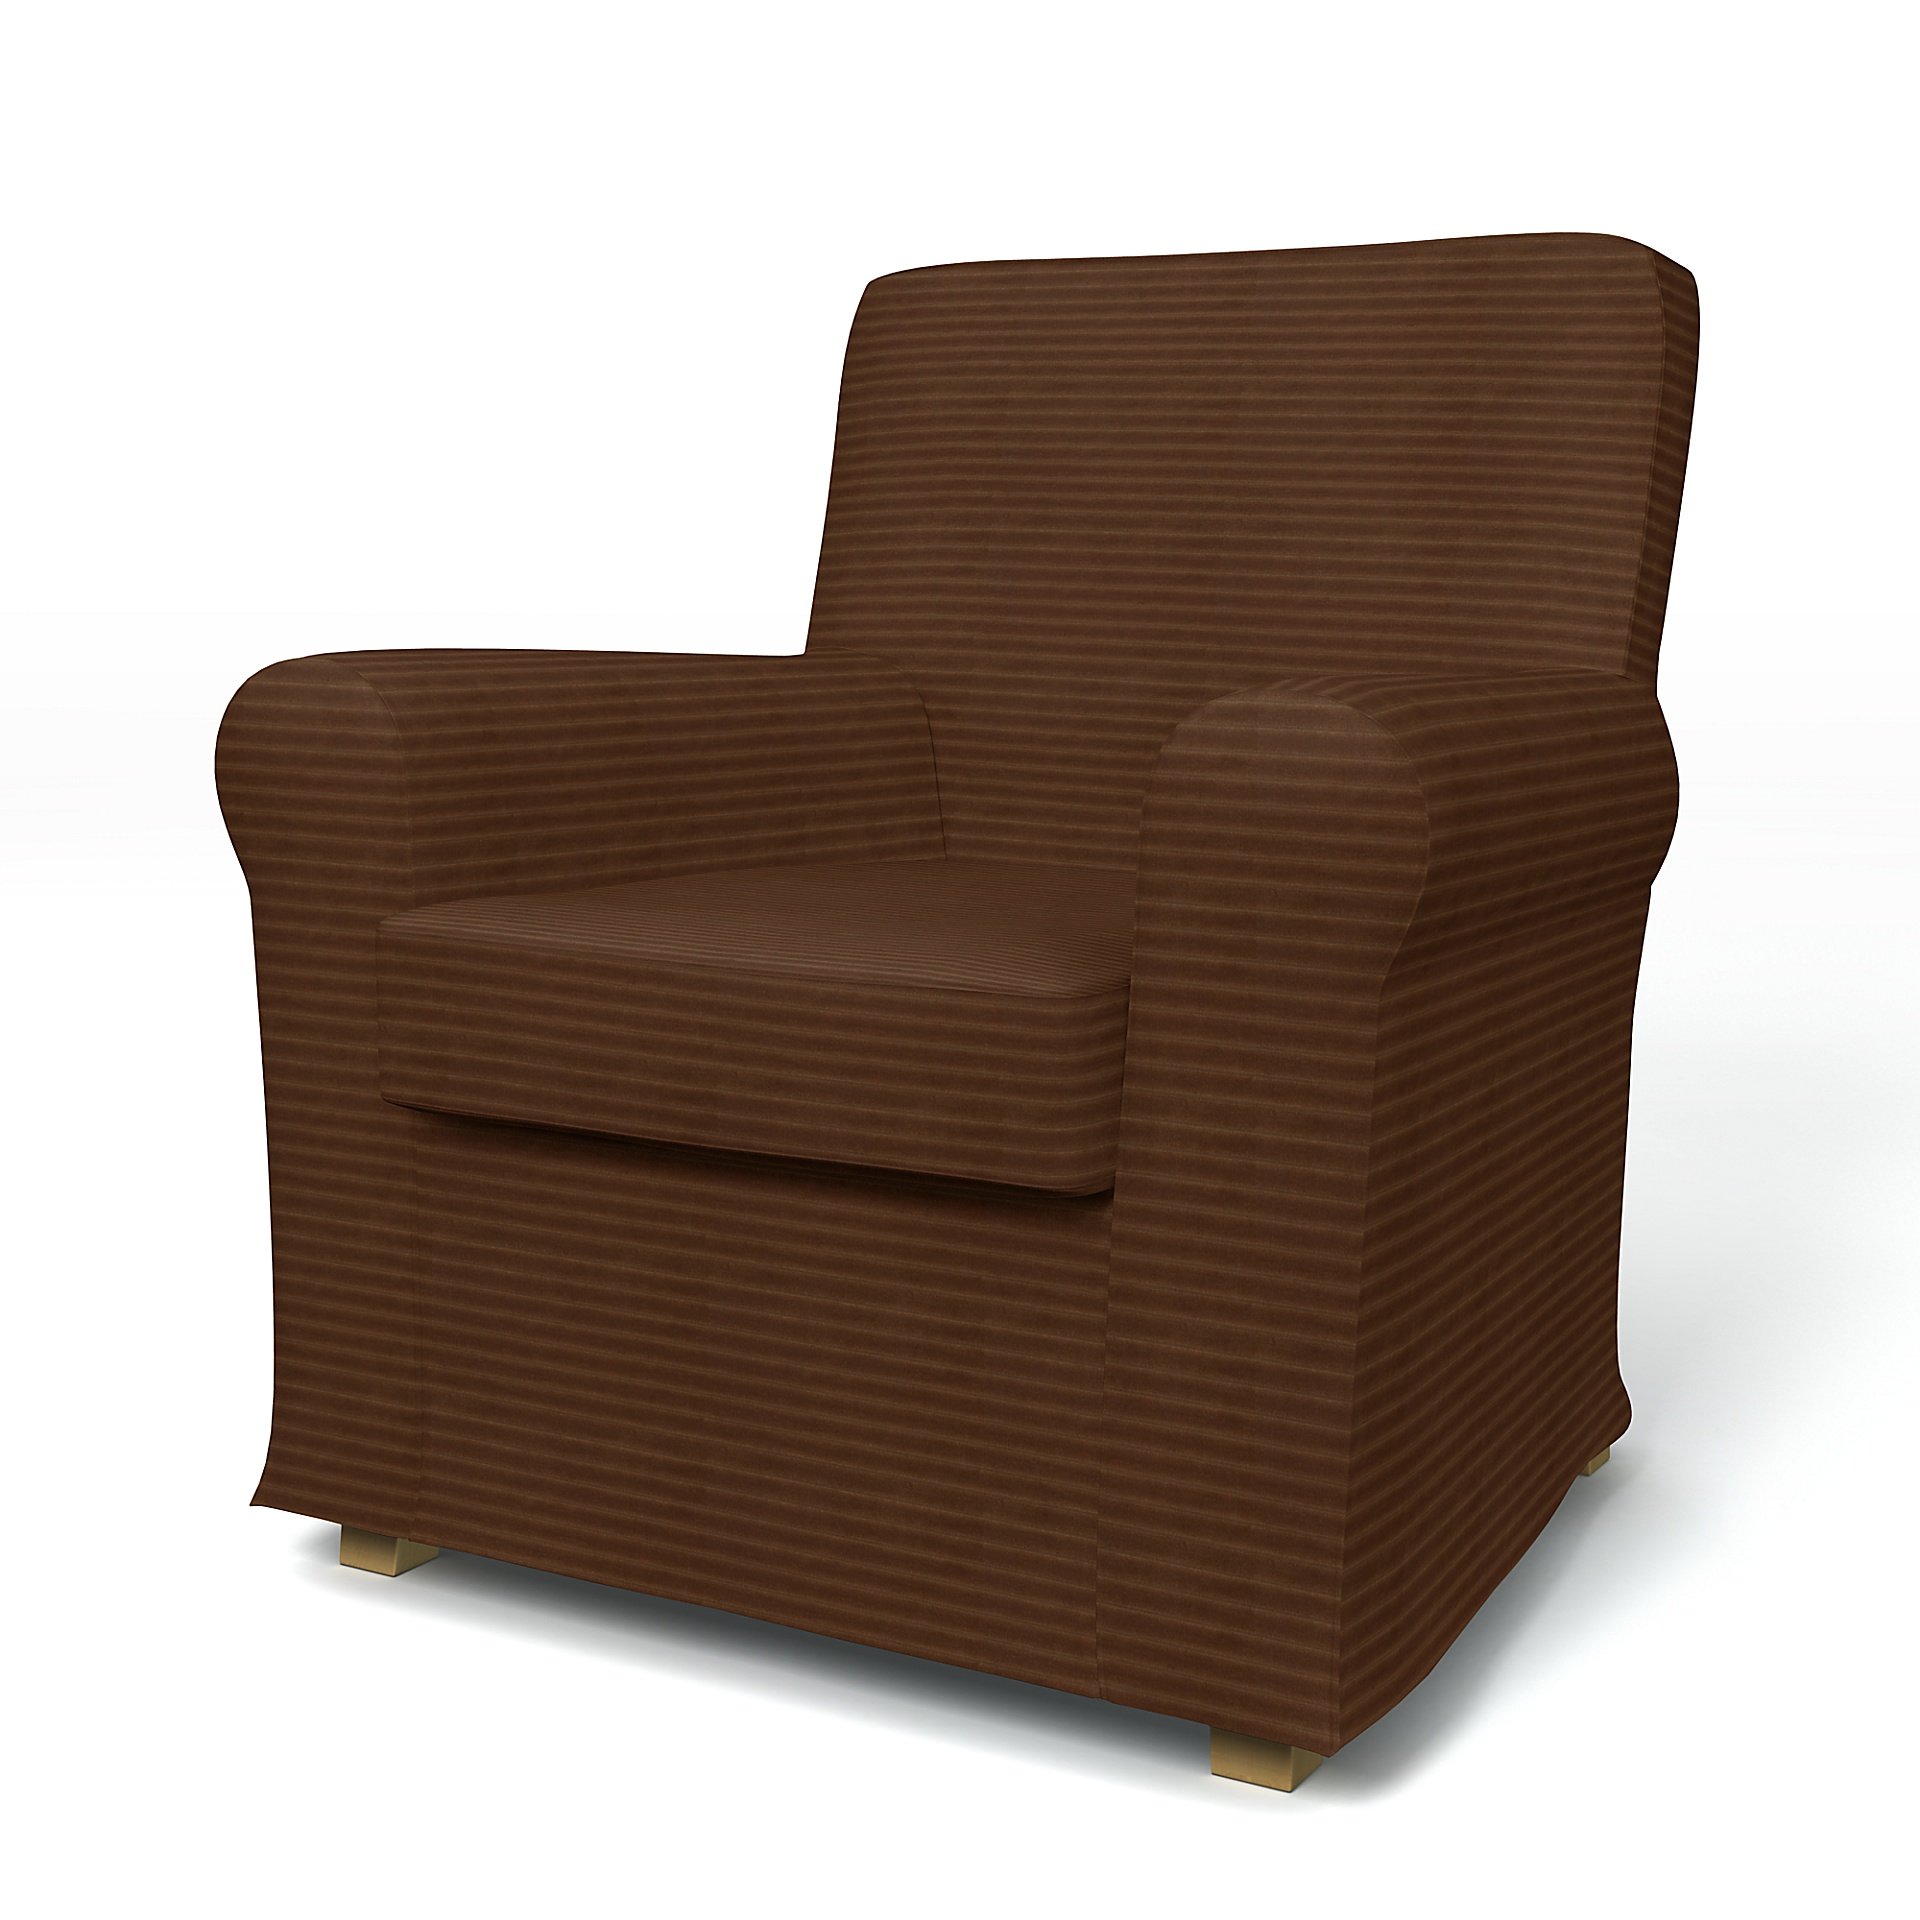 IKEA - Jennylund Armchair Cover, Chocolate Brown, Corduroy - Bemz